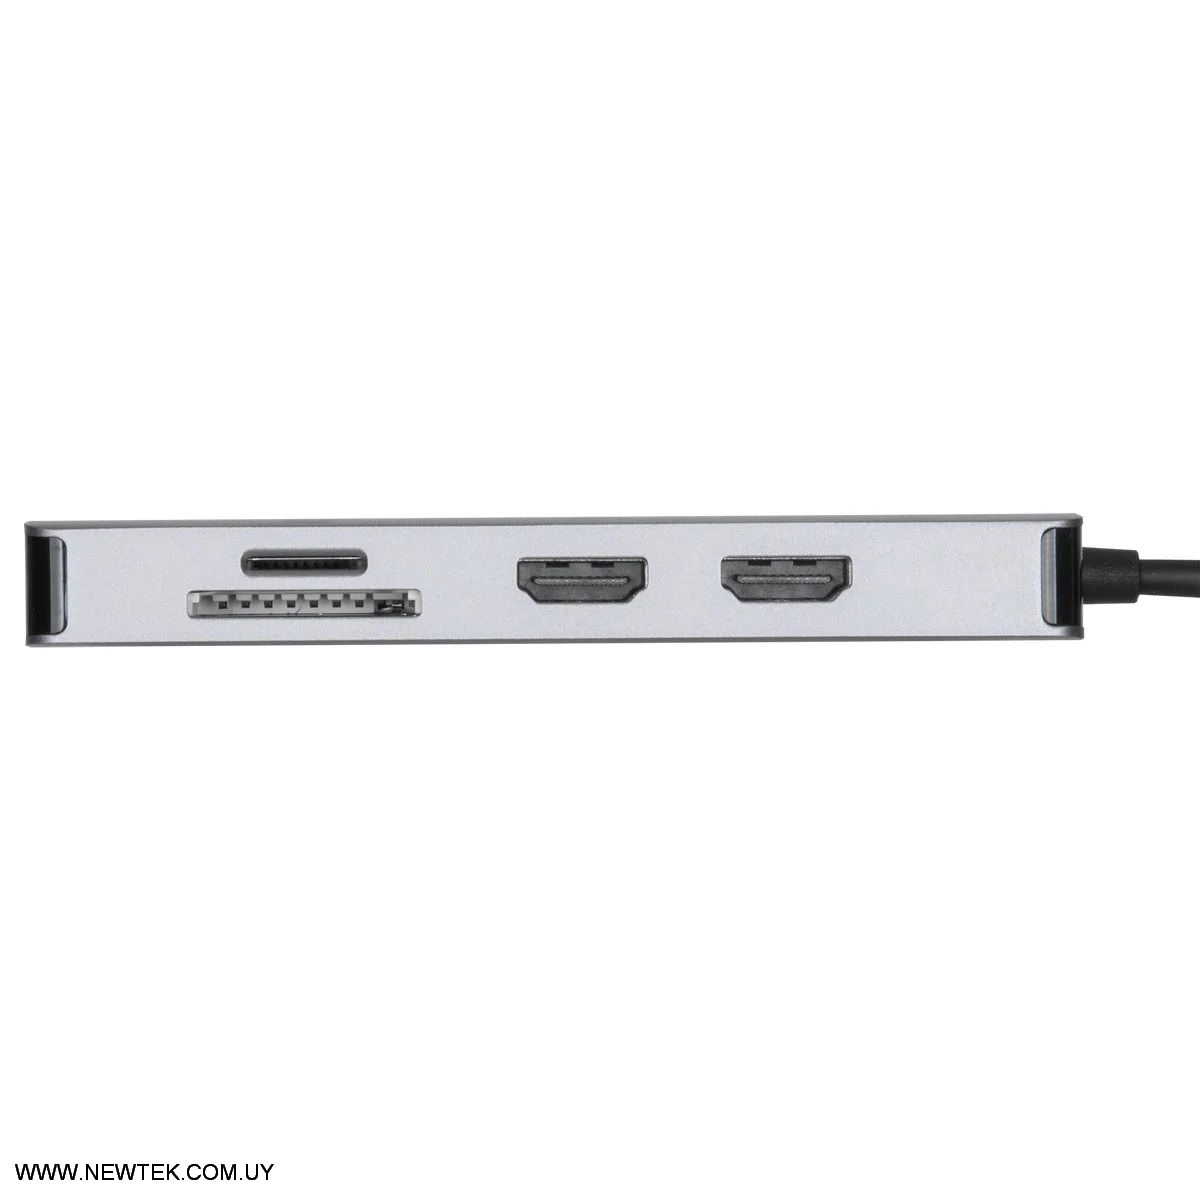 Adaptador Targus DOC423TT Docking USB-C Dual HDMI 4K USB 3.0 LAN RJ45 MicroSD/SD